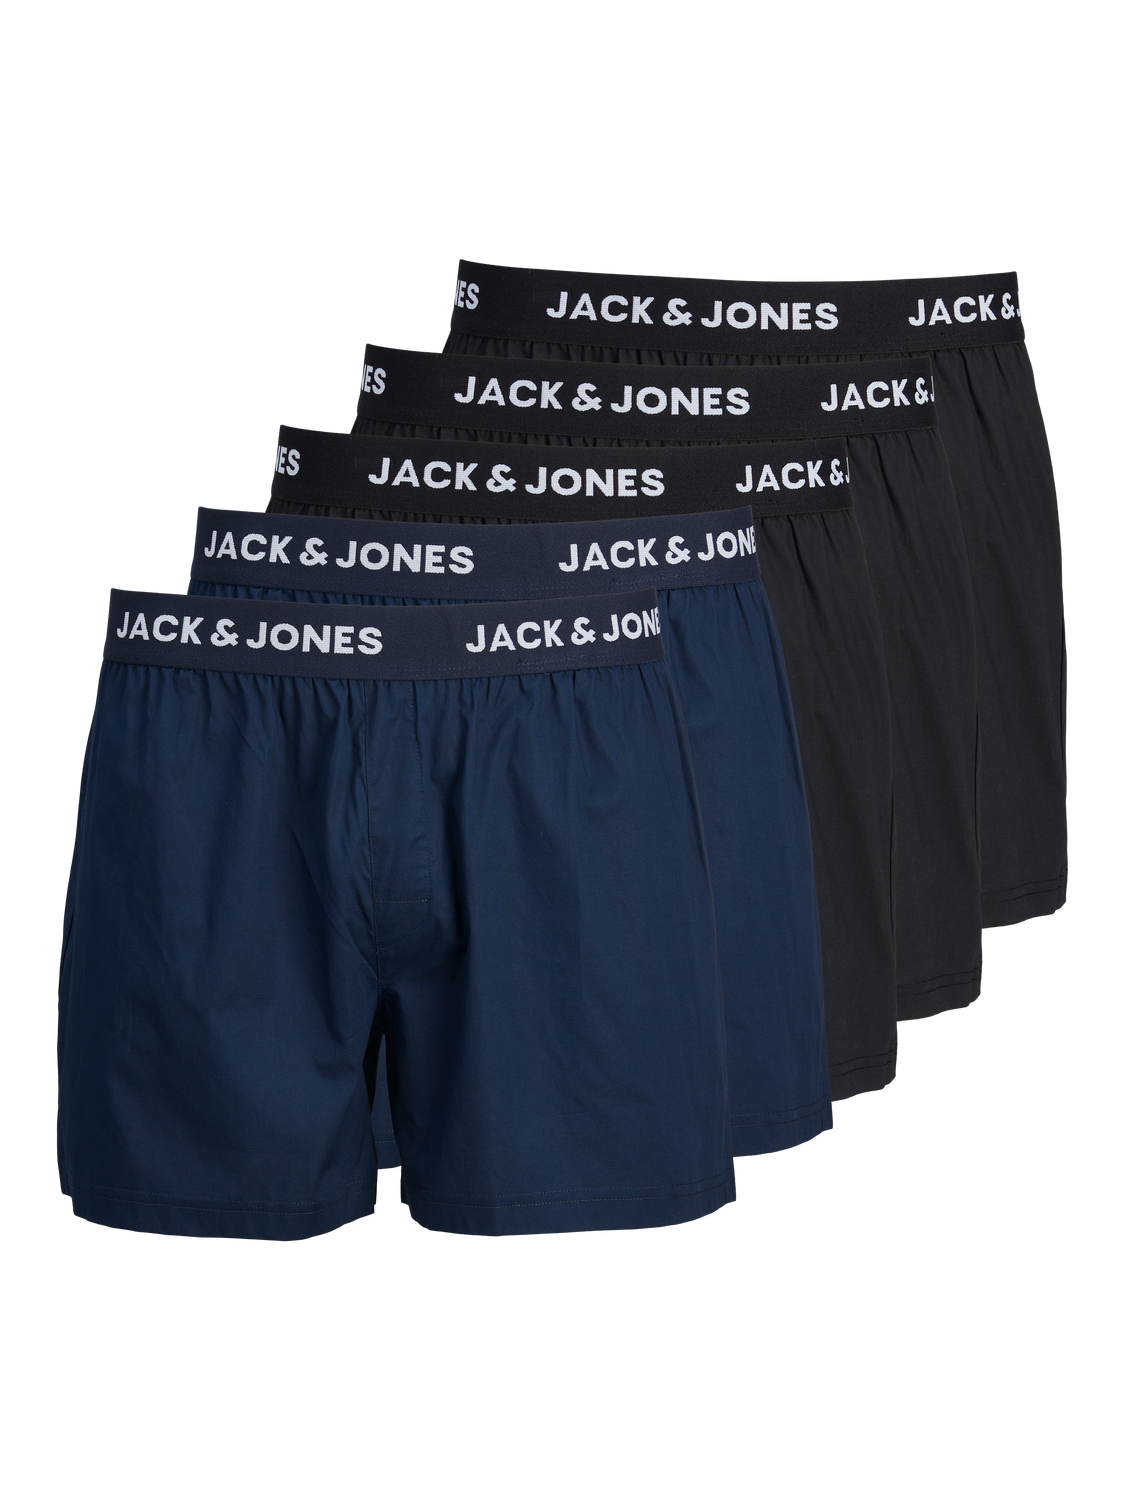 Jack & Jones 5-pak Trunks -Black - 12250070